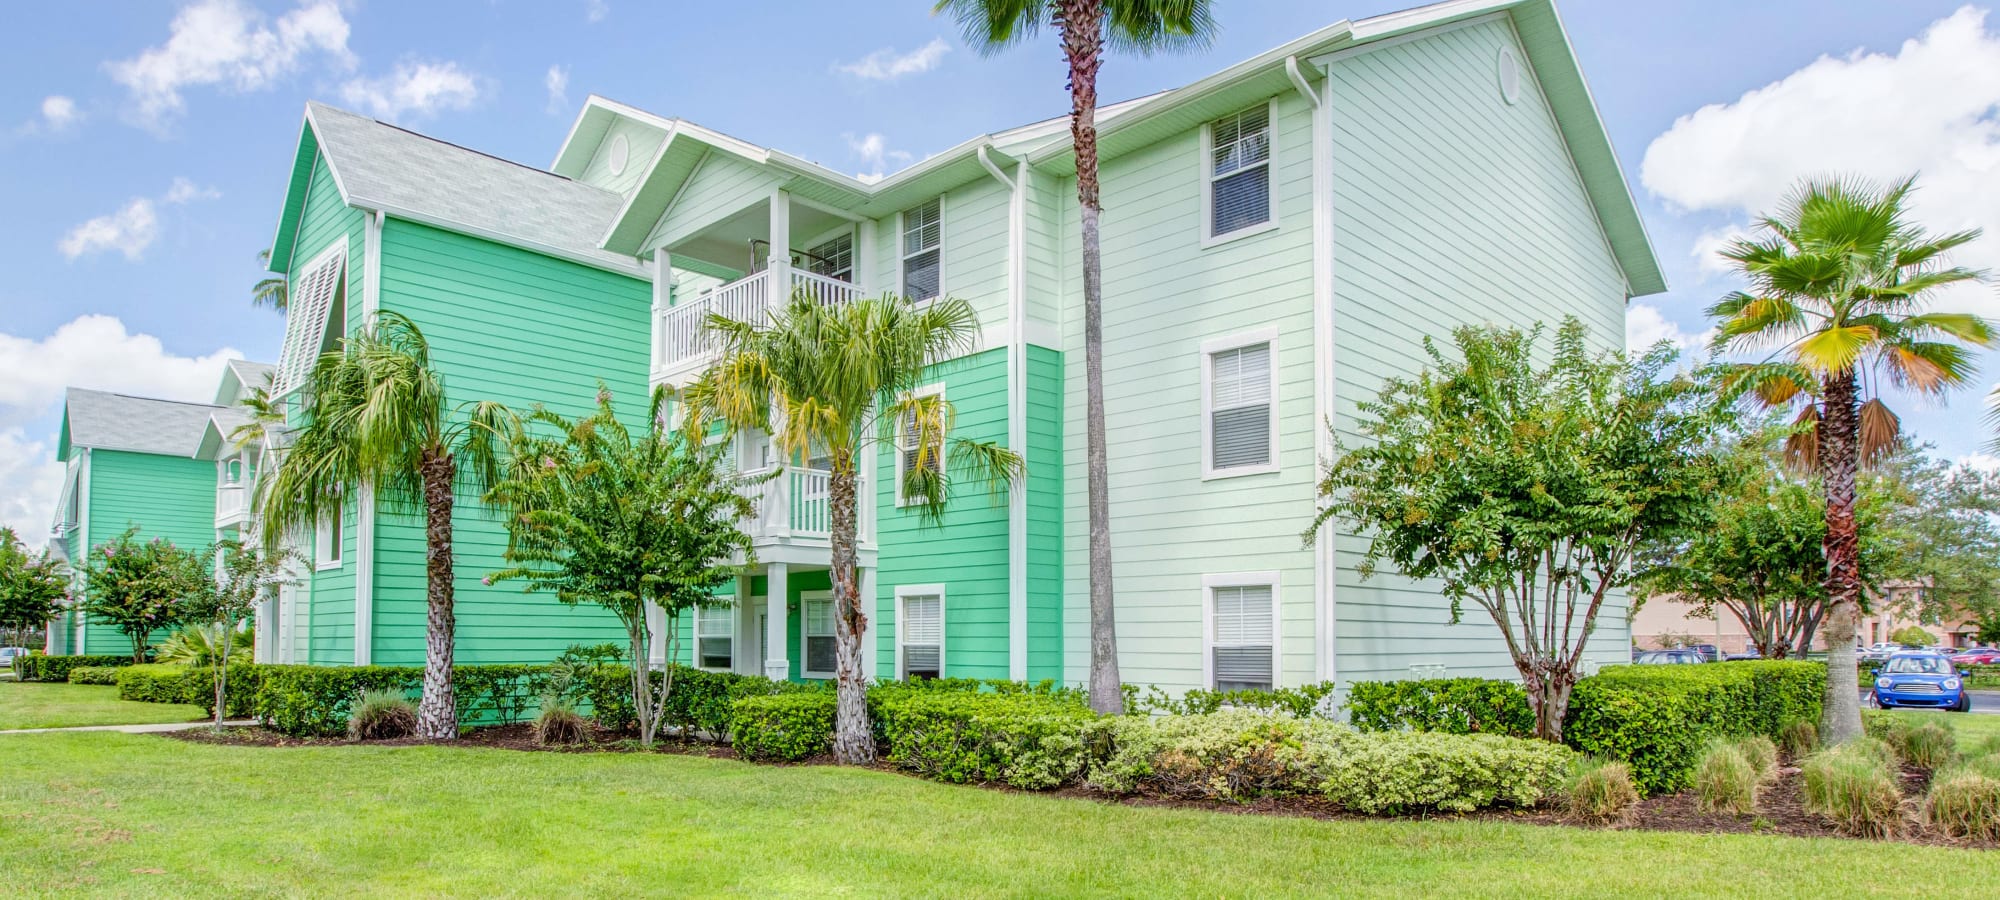 Abaco Key apartments in Orlando, Florida